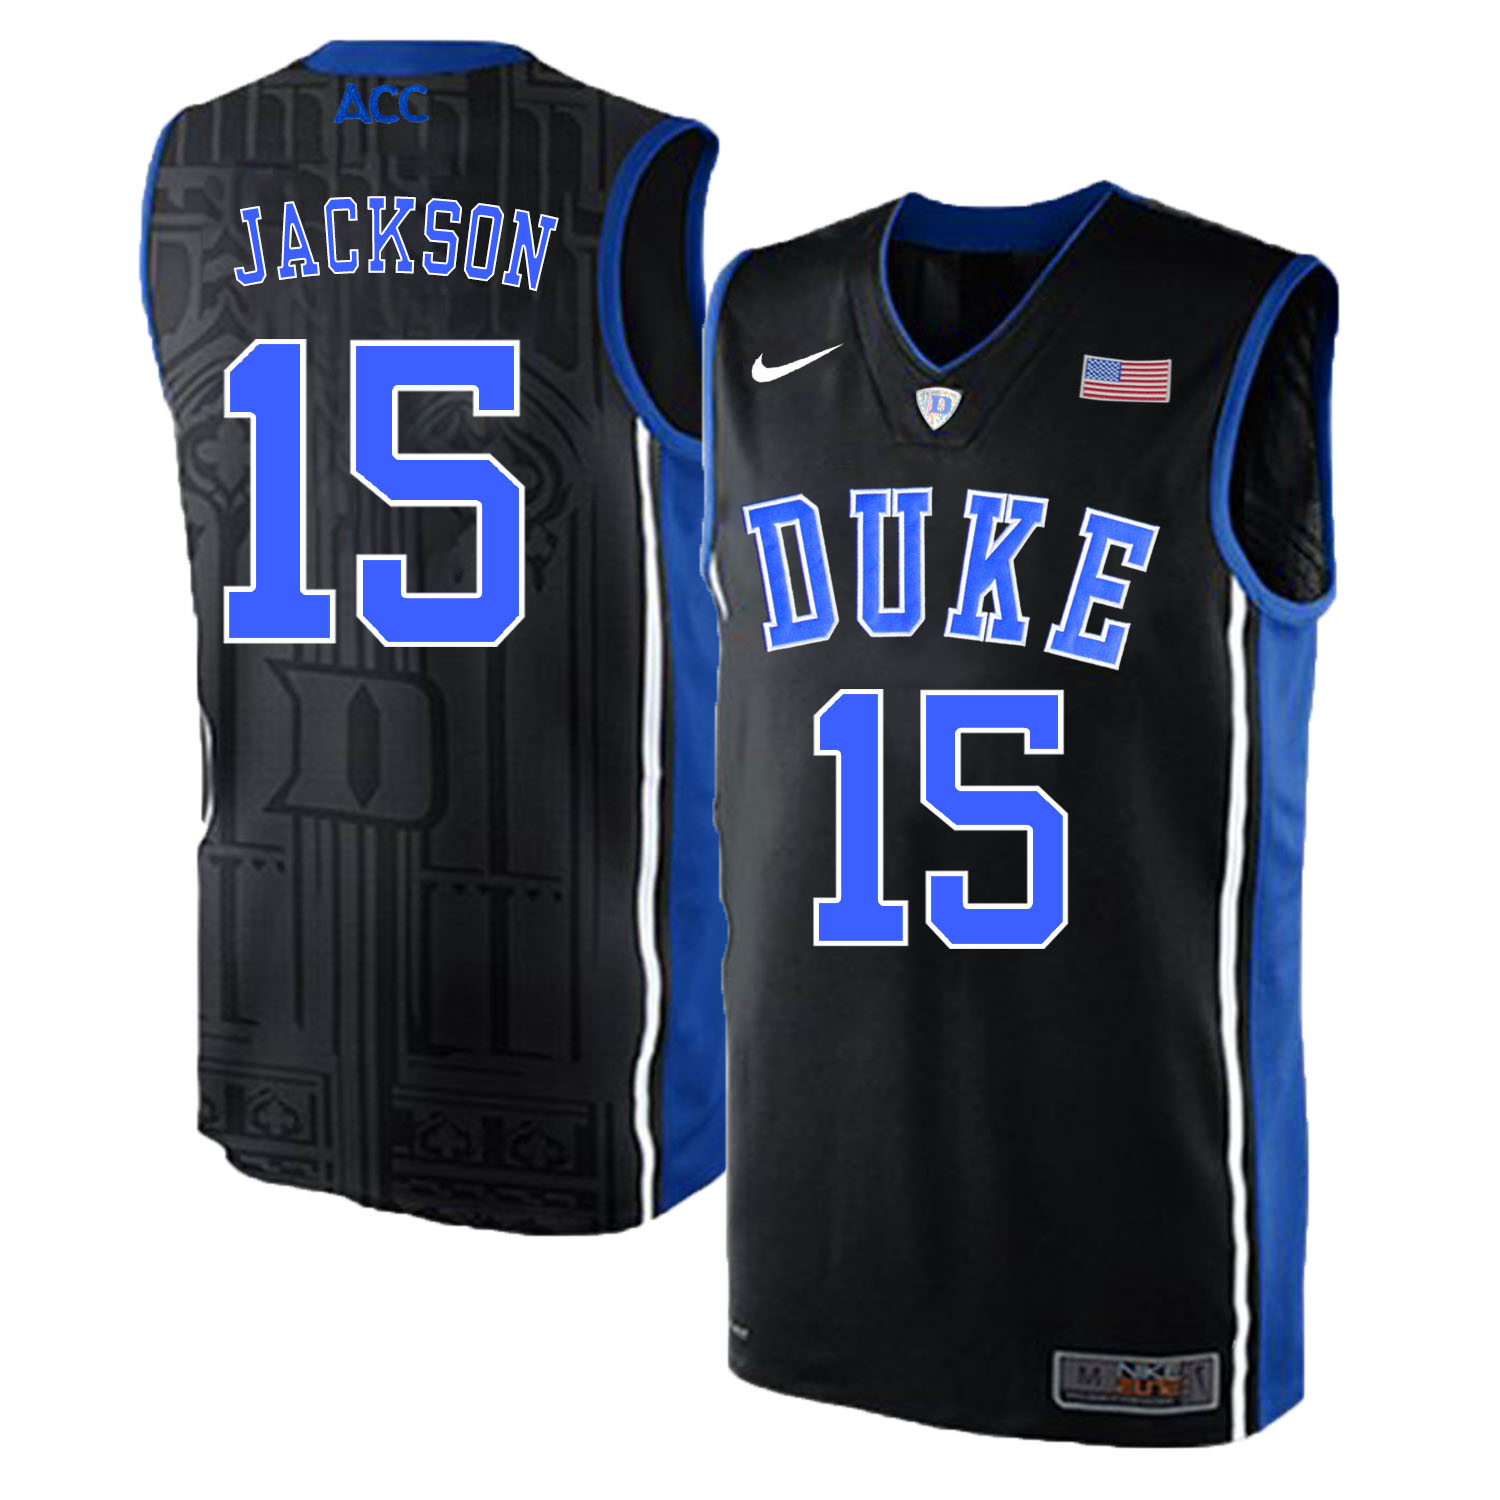 Duke Blue Devils 15 Frank Jackson Black Elite Nike College Basketball Jersey